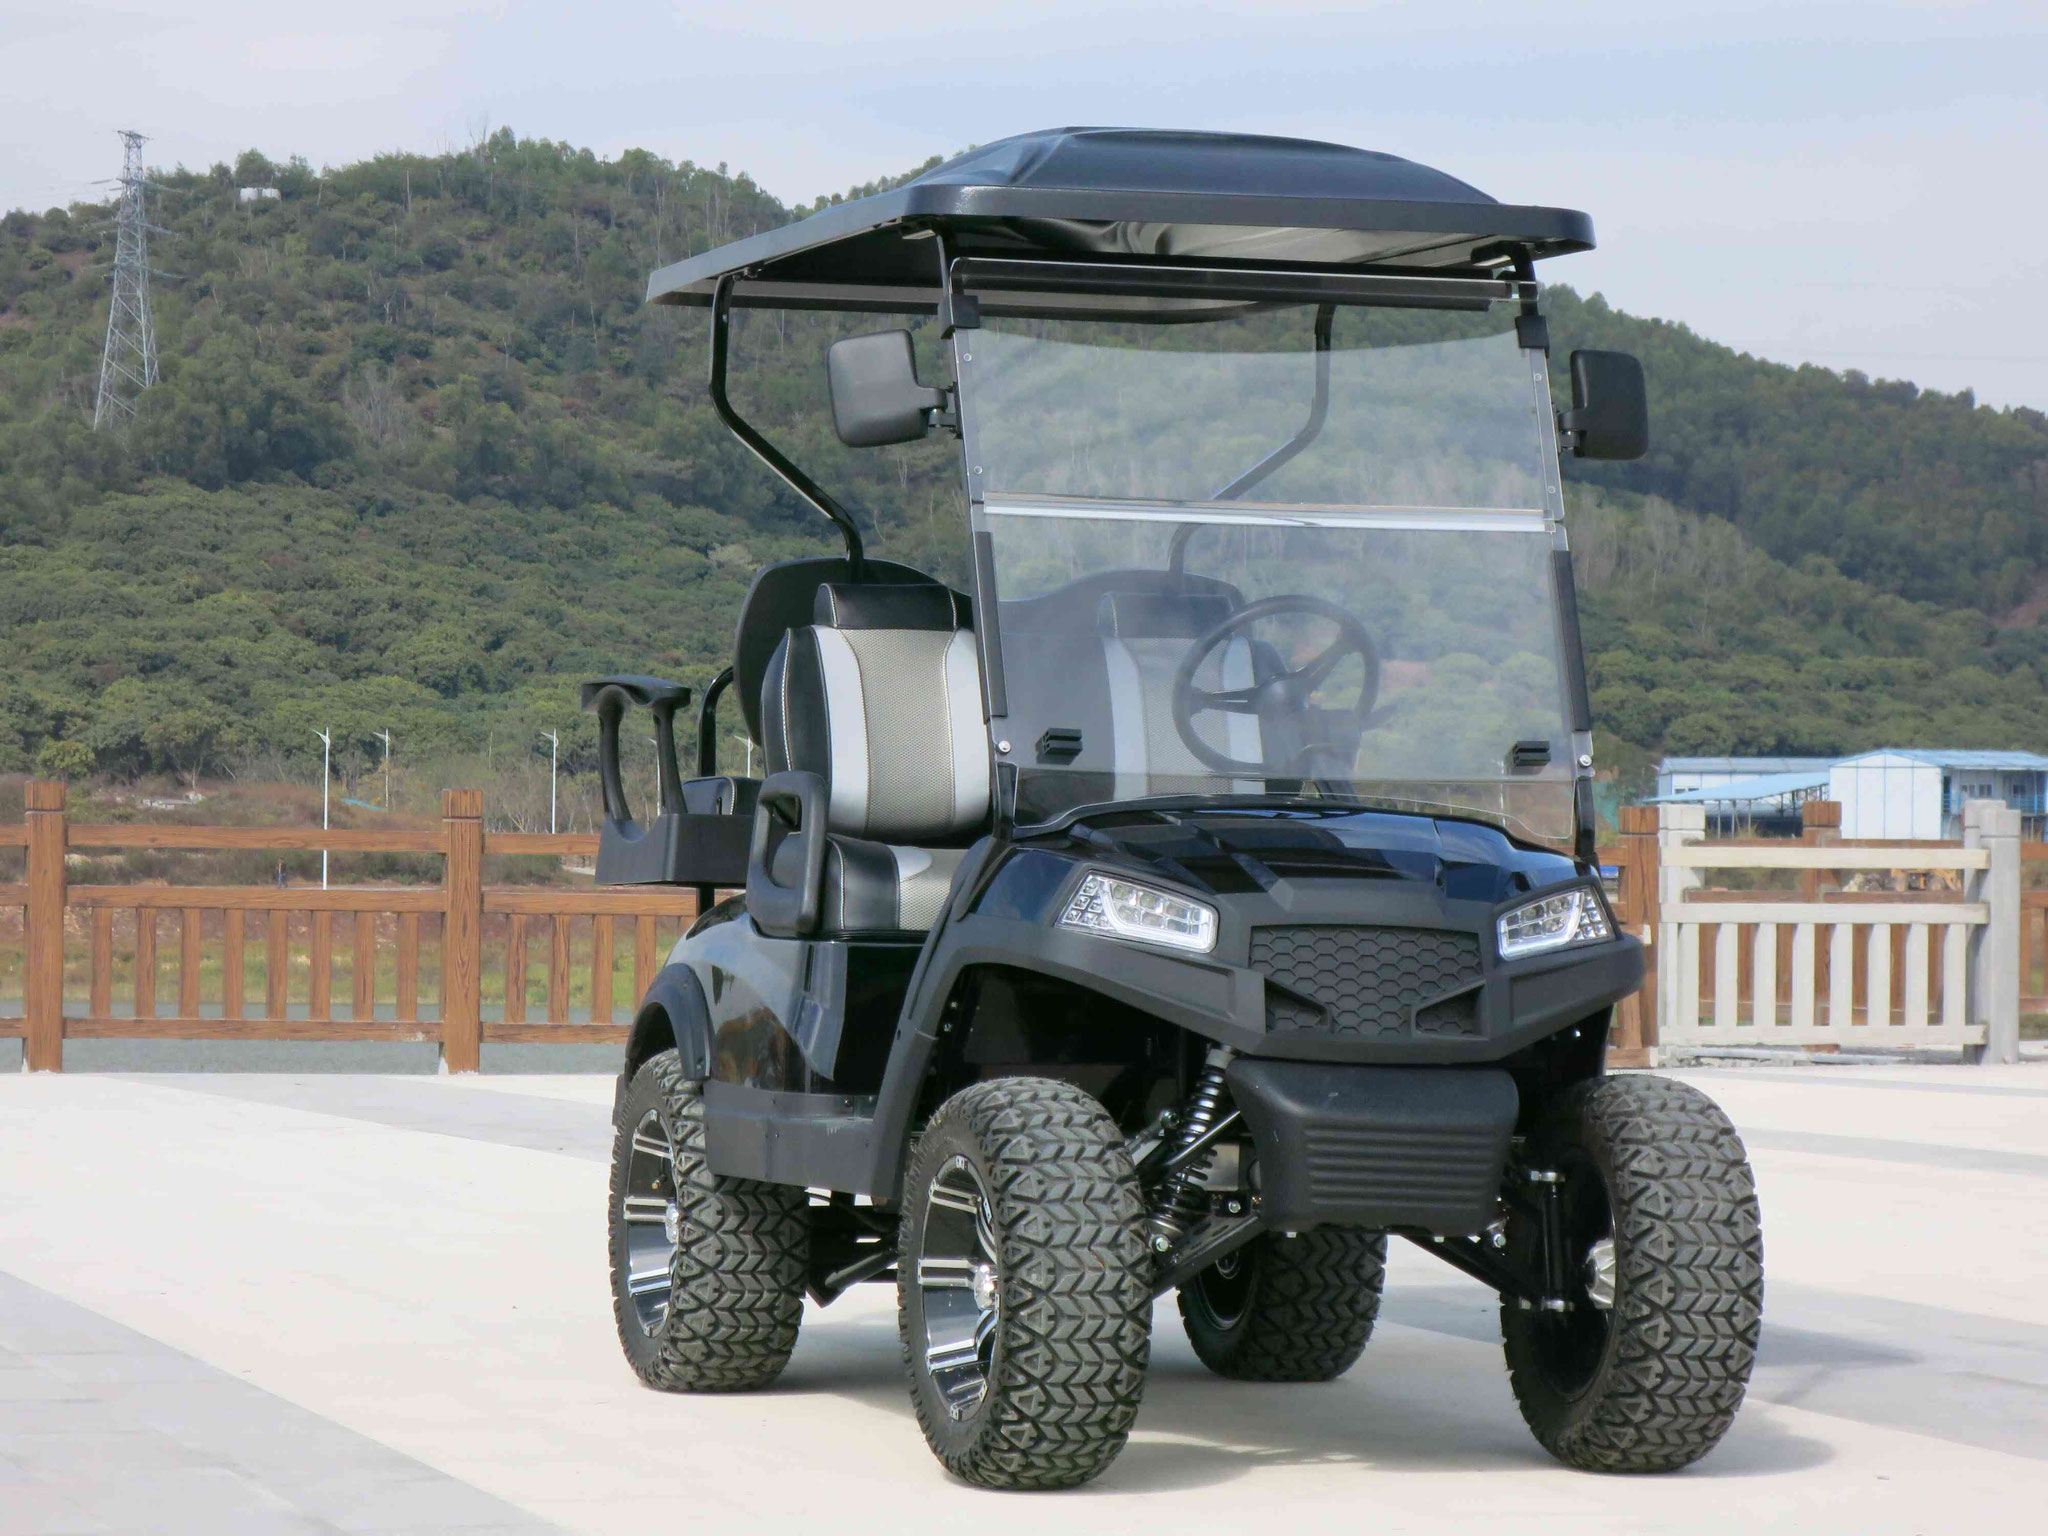 V2+2-Electric Golf Cart